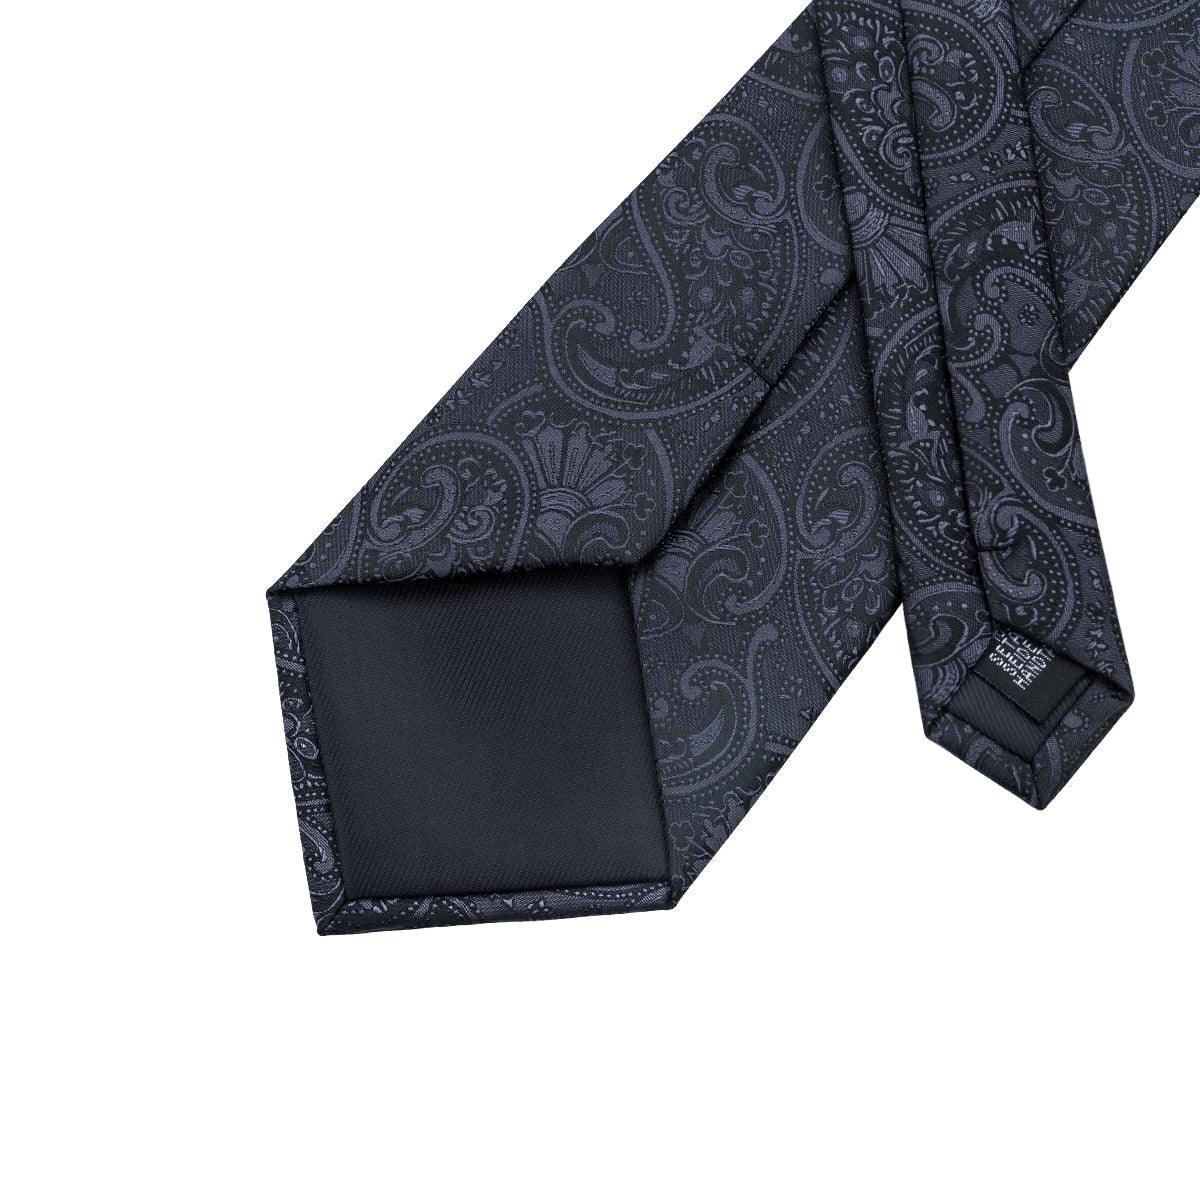 Extra Long Black Paisley Tie Pocket Square Cufflink Set - STYLETIE